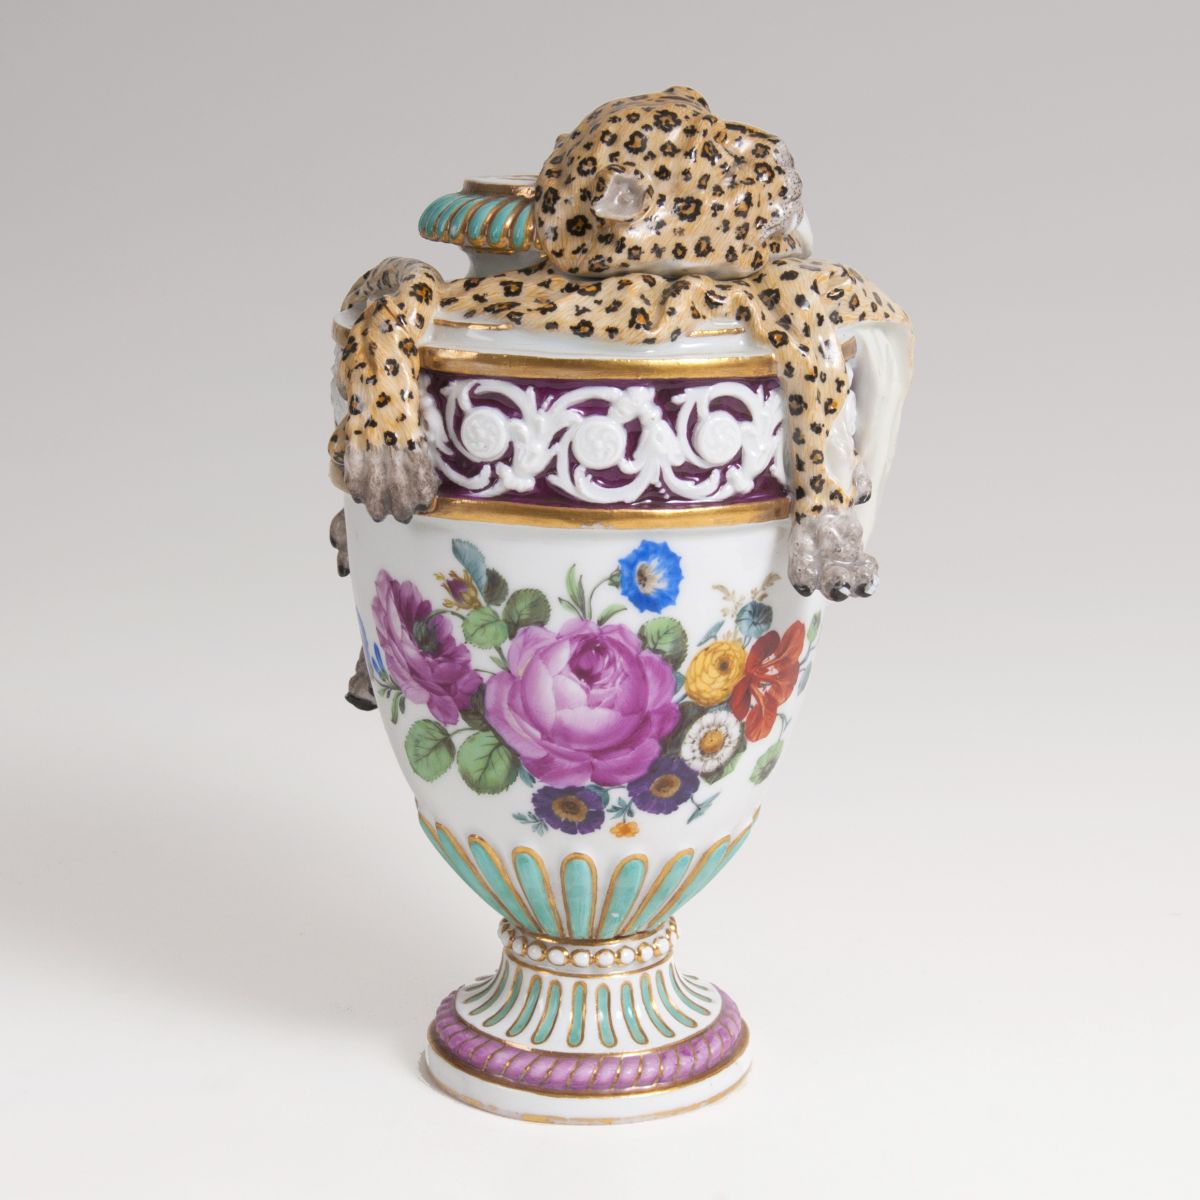 A rare potpourri vase with leopard